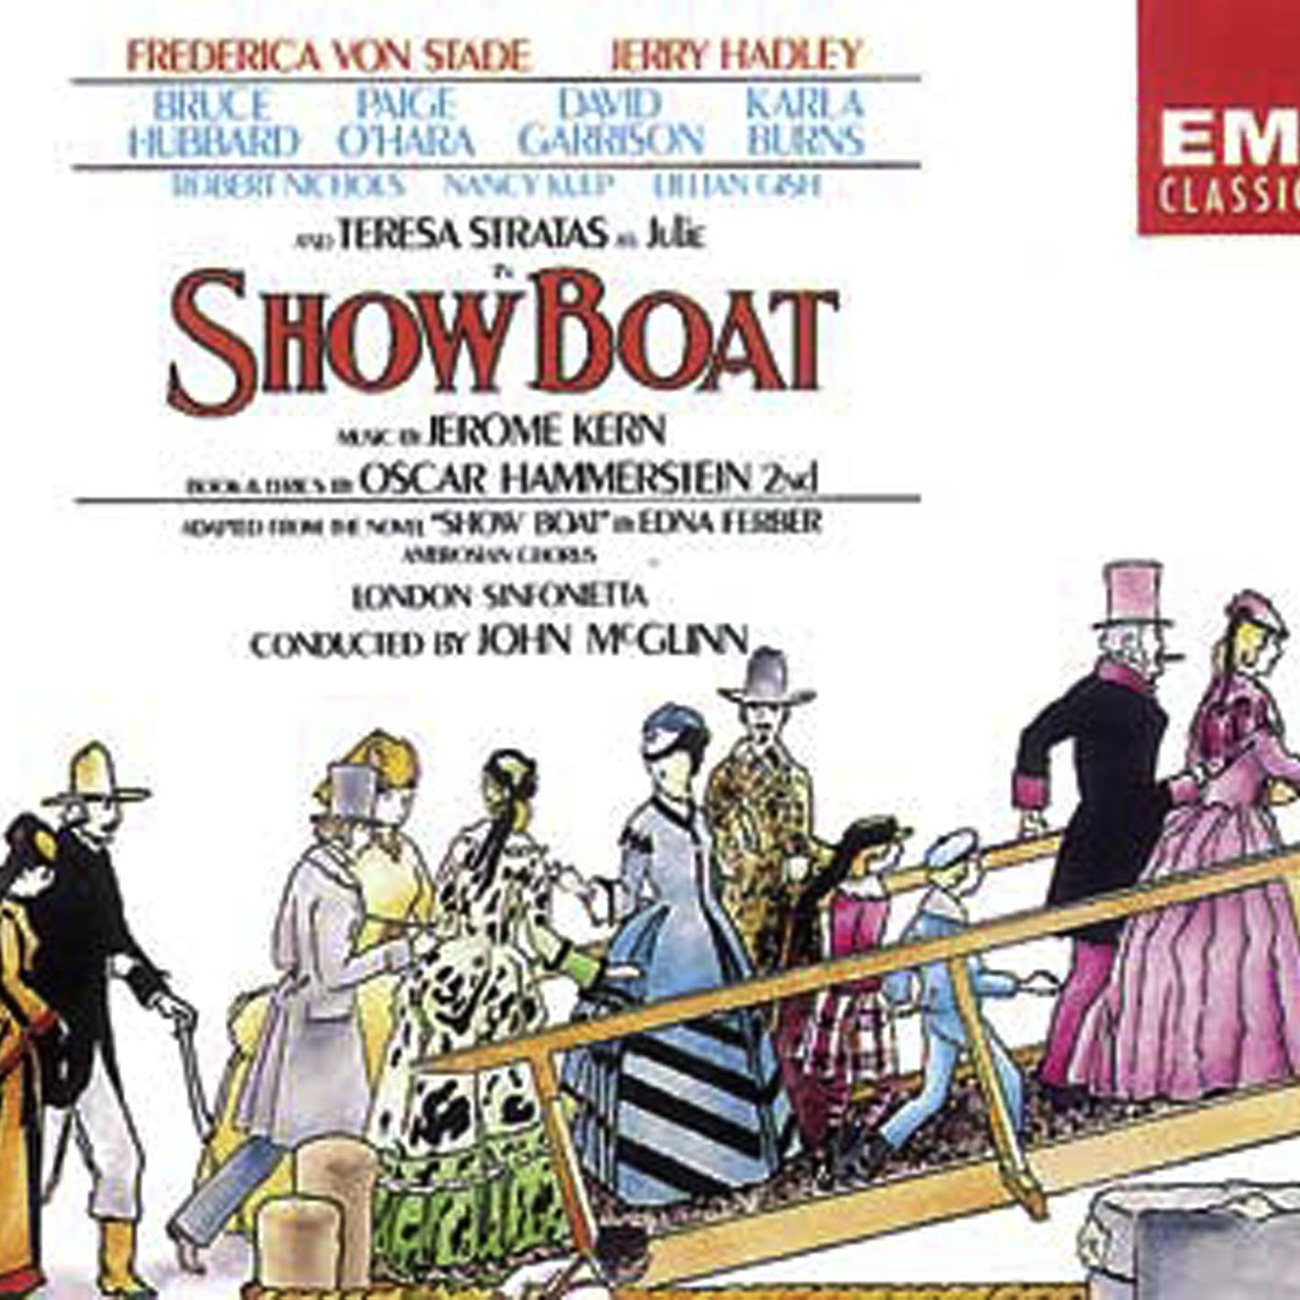 Show Boat, ACT 2, Scene 9: Opening Final Scene